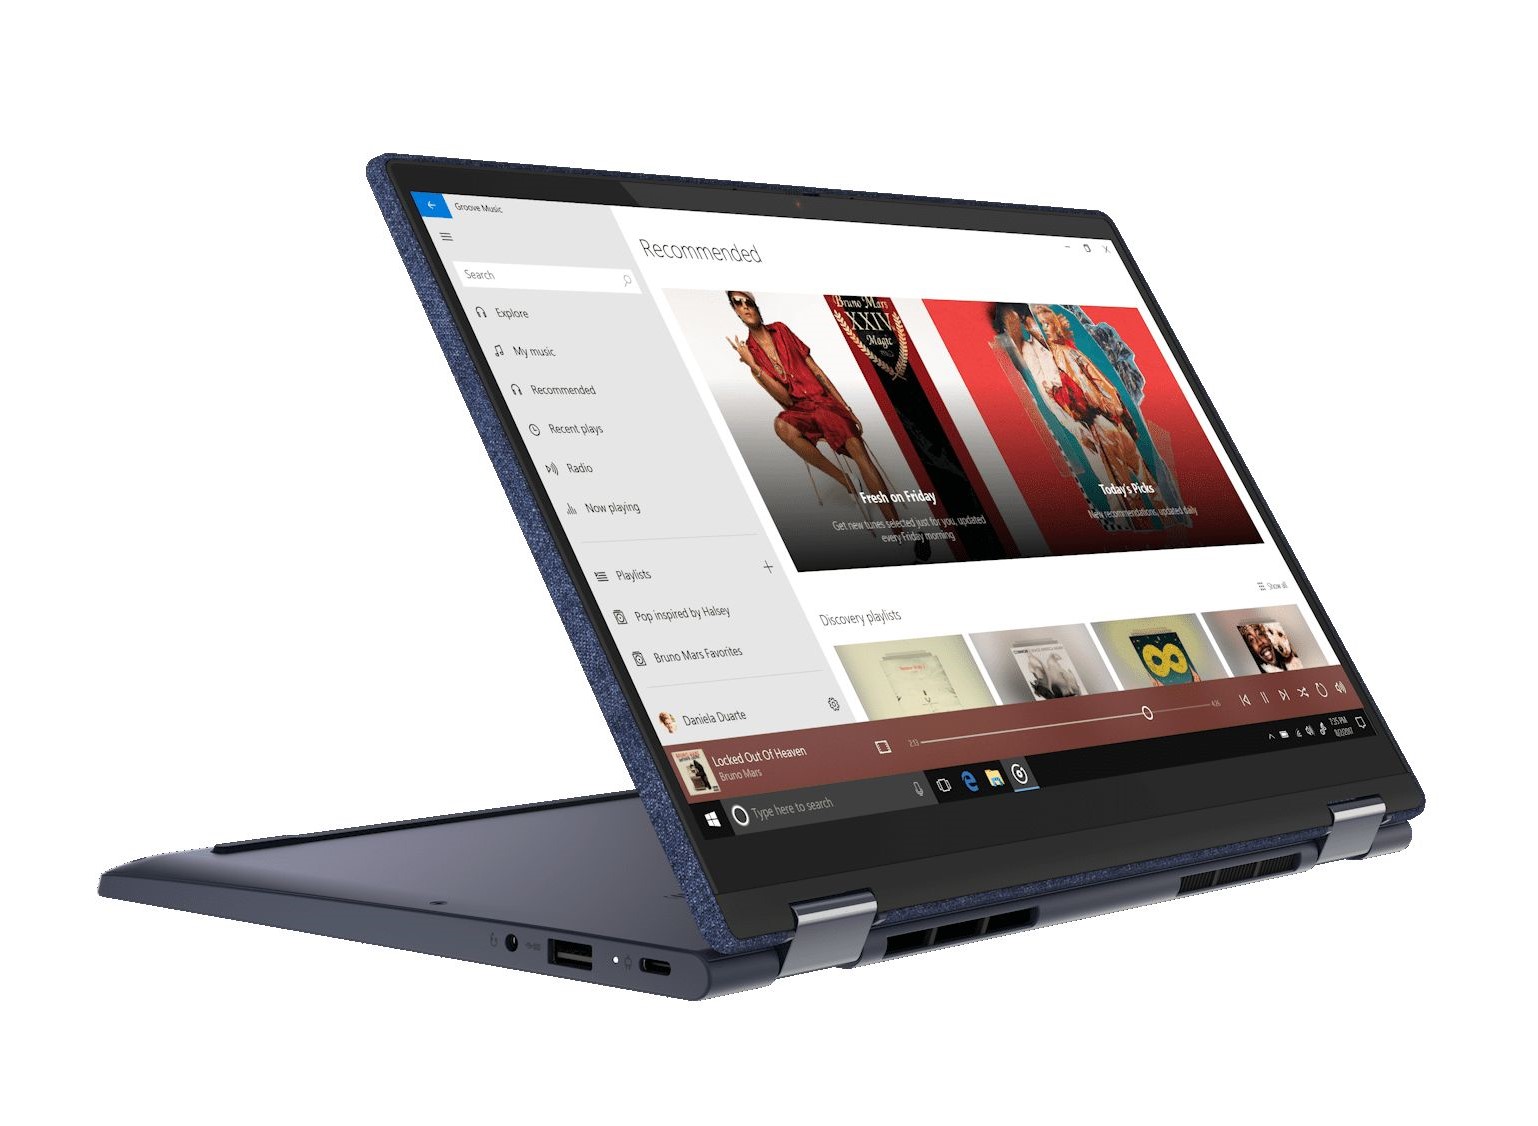 Lenovo Updates Its Yoga Lineup With Five New Ultra Slim Amd Intel